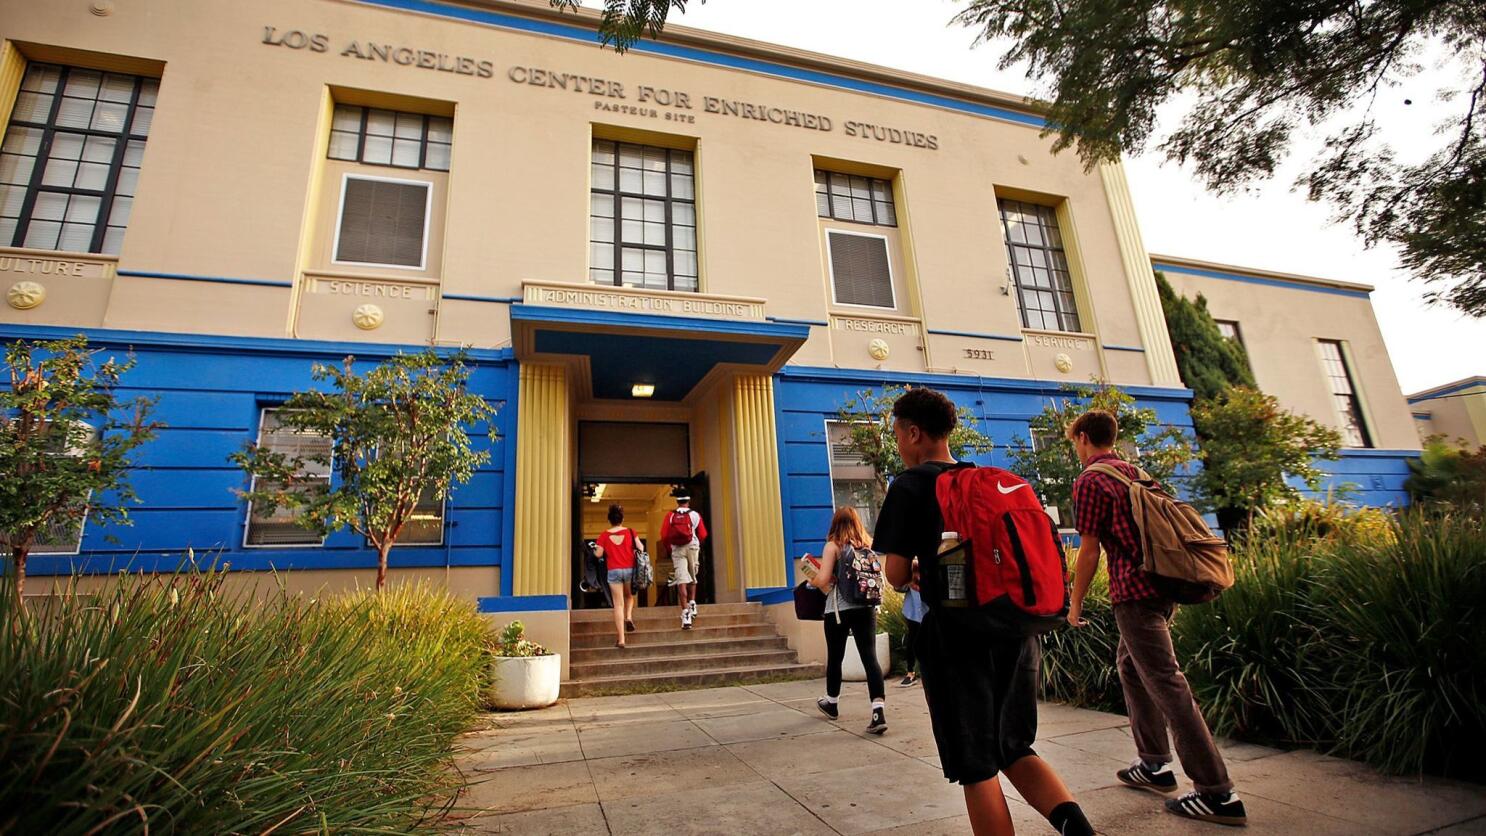 Sherman Oaks Center for Enriched Studies Wins LAUSD Academic Decathlon -  The San Fernando Valley Sun